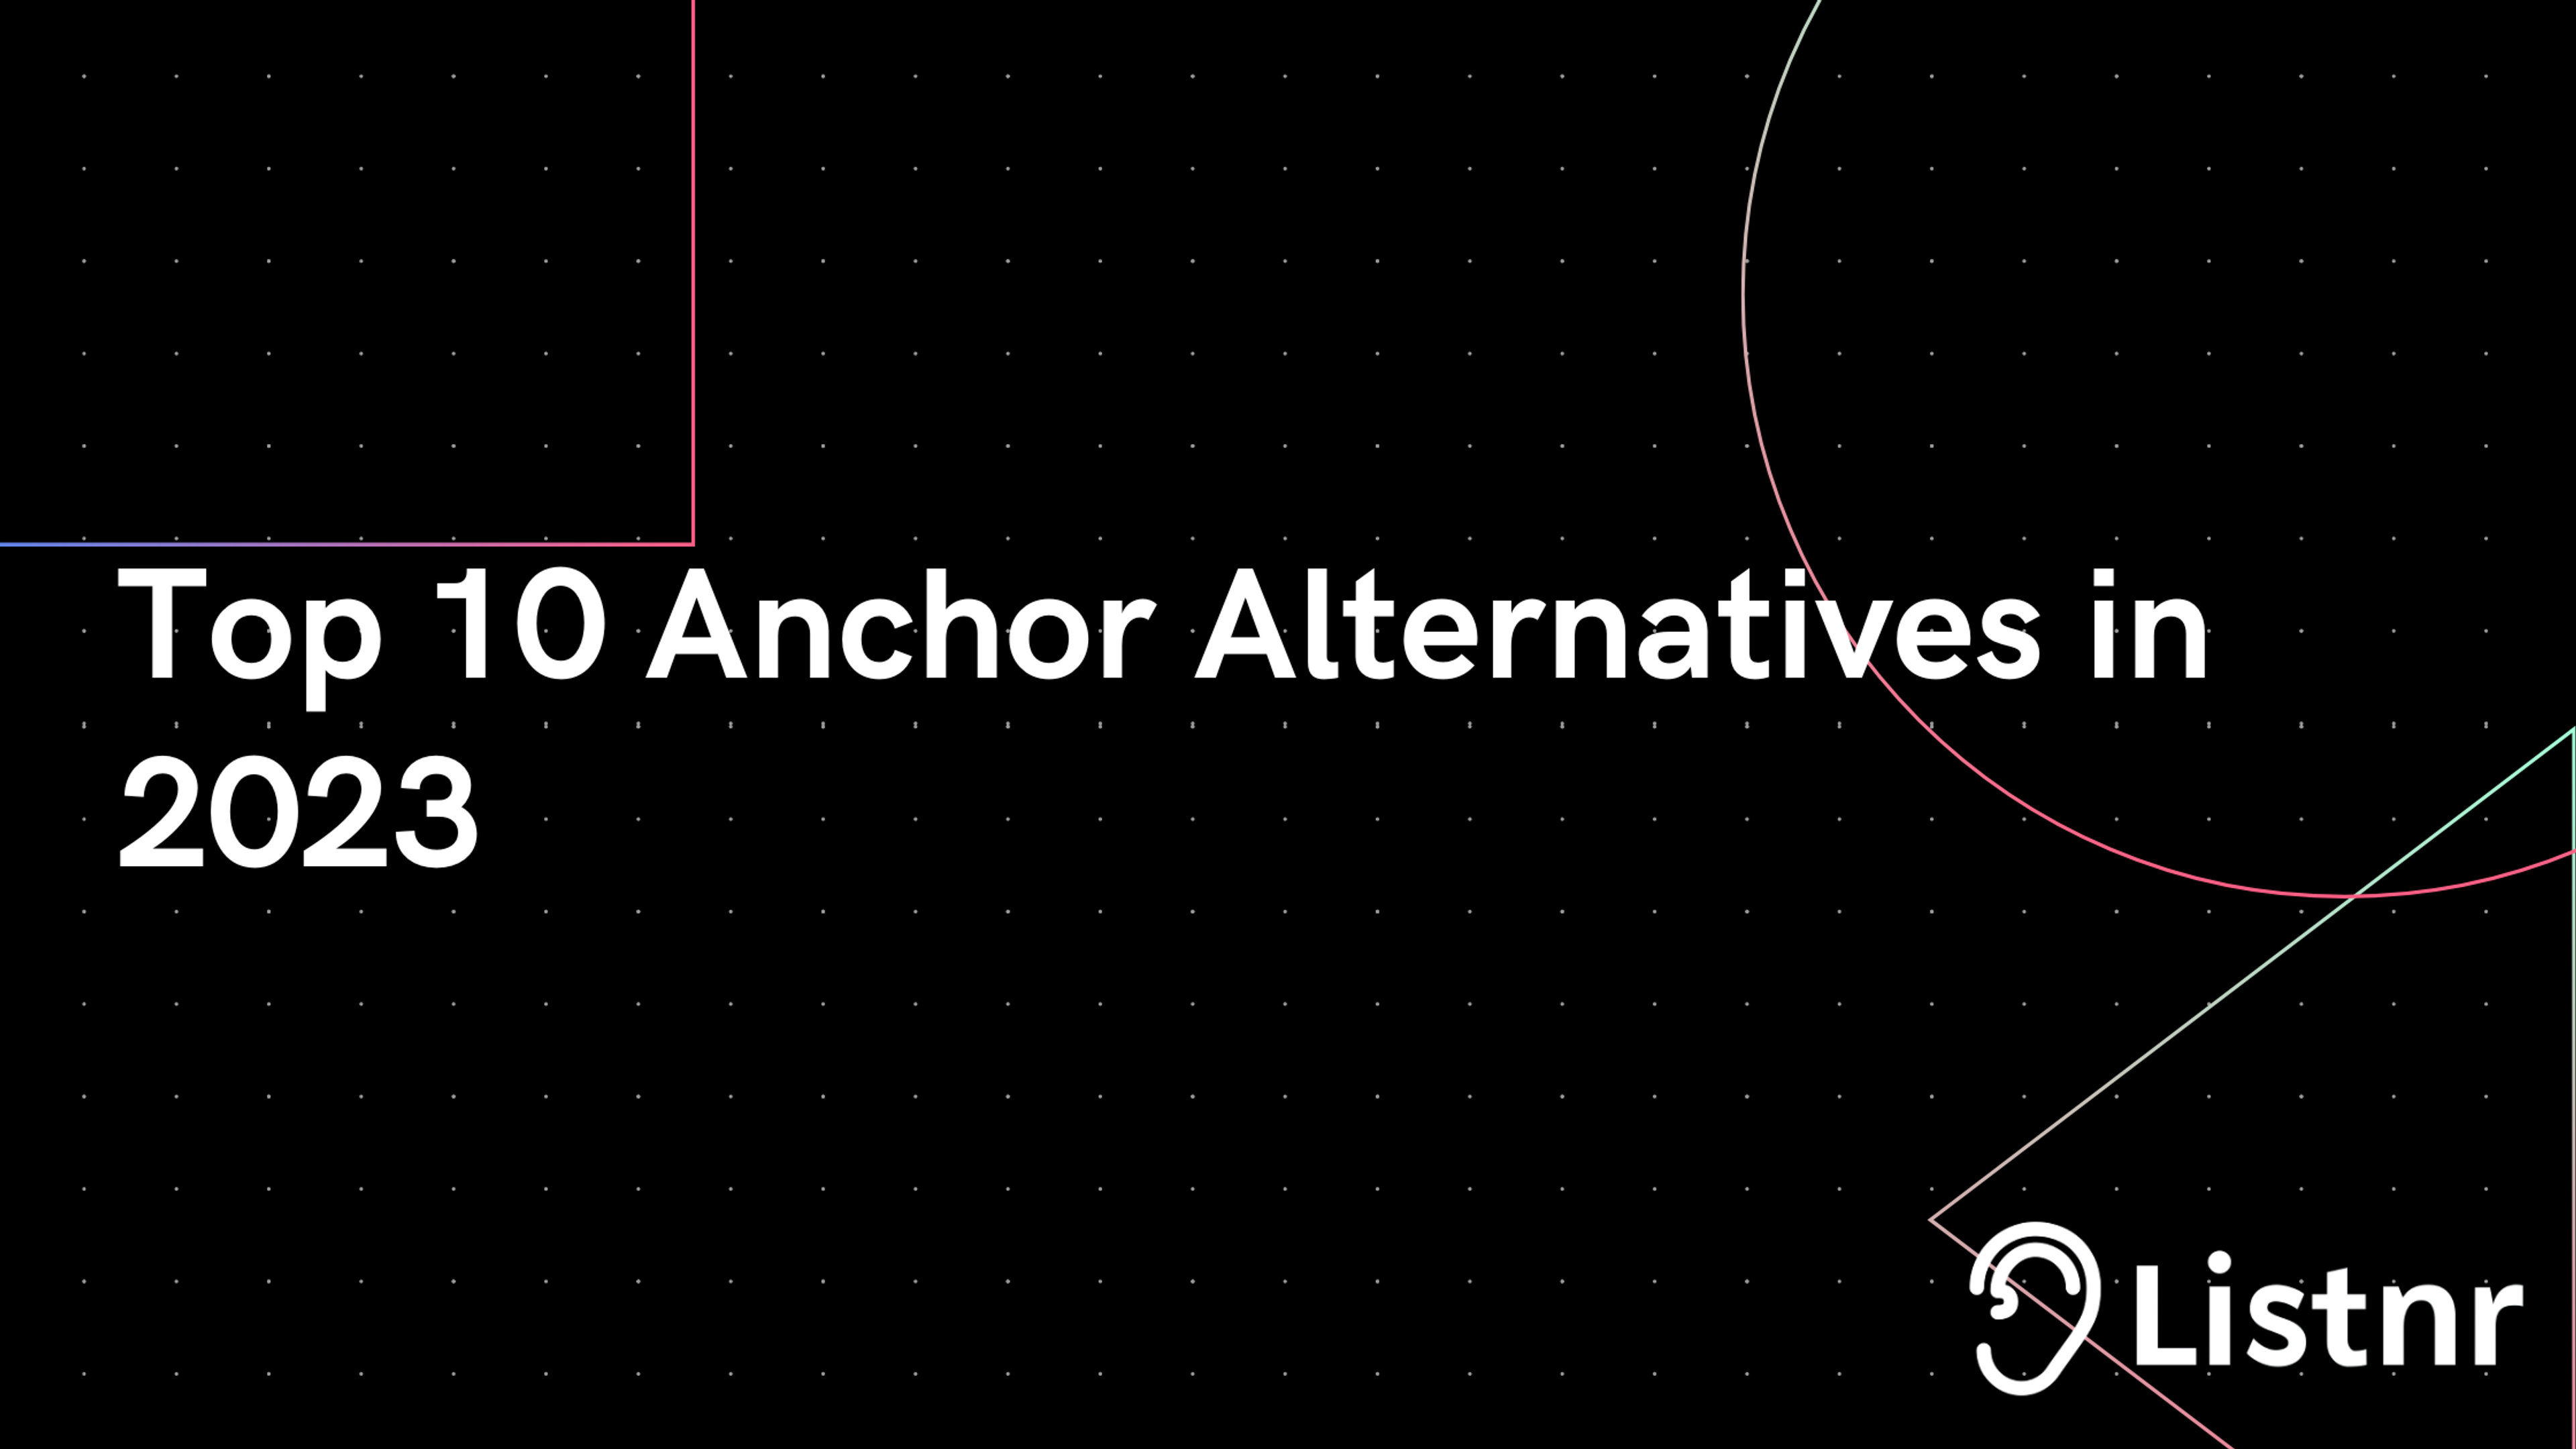 Top 10 Anchor Alternatives in 2023